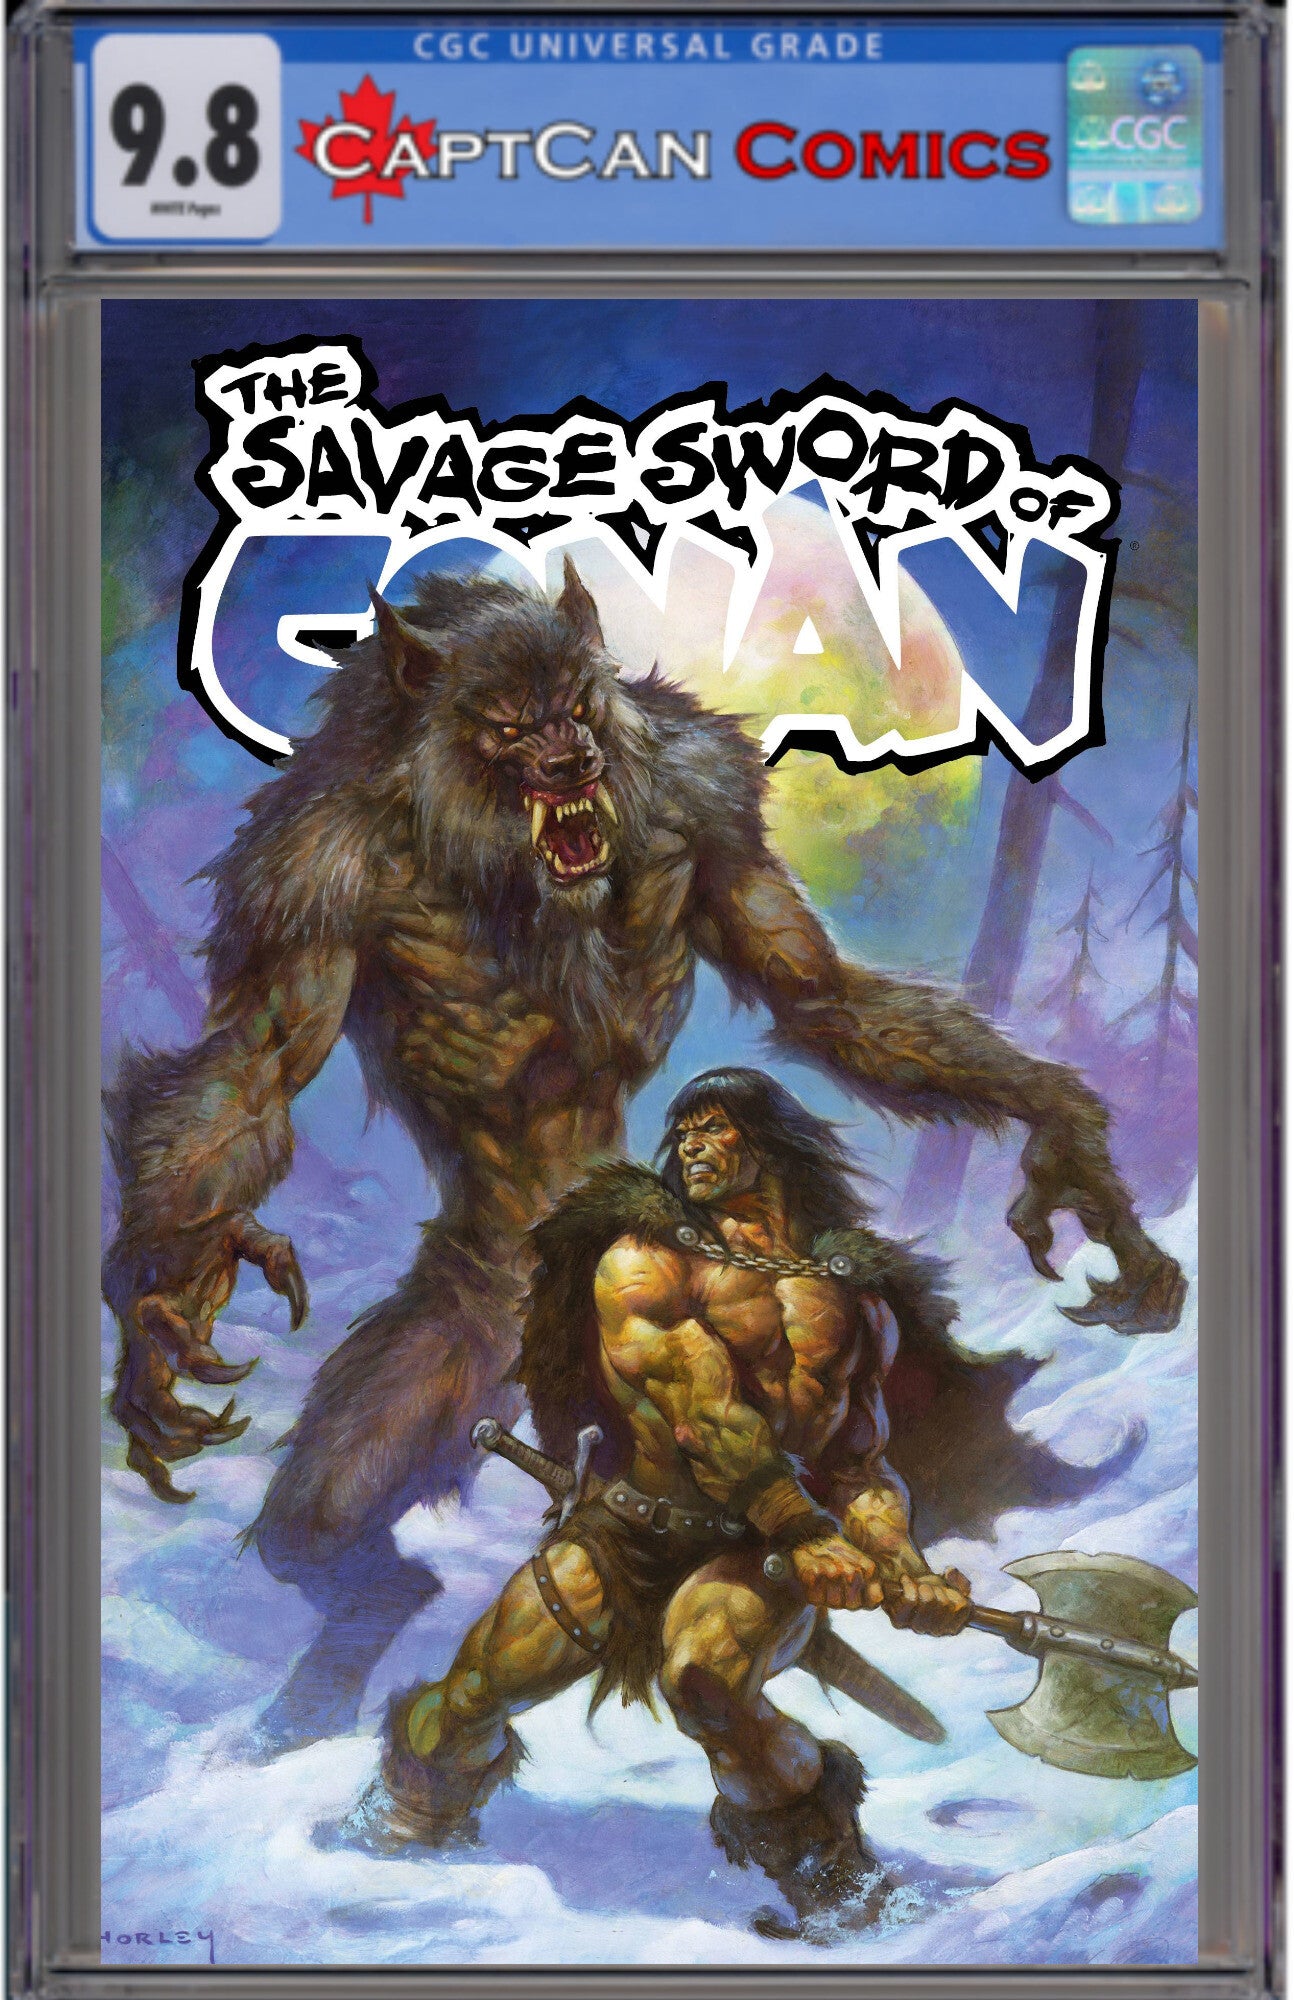 SAVAGE SWORD OF CONAN #3 (OF 6) CVR A HORLEY (MR)